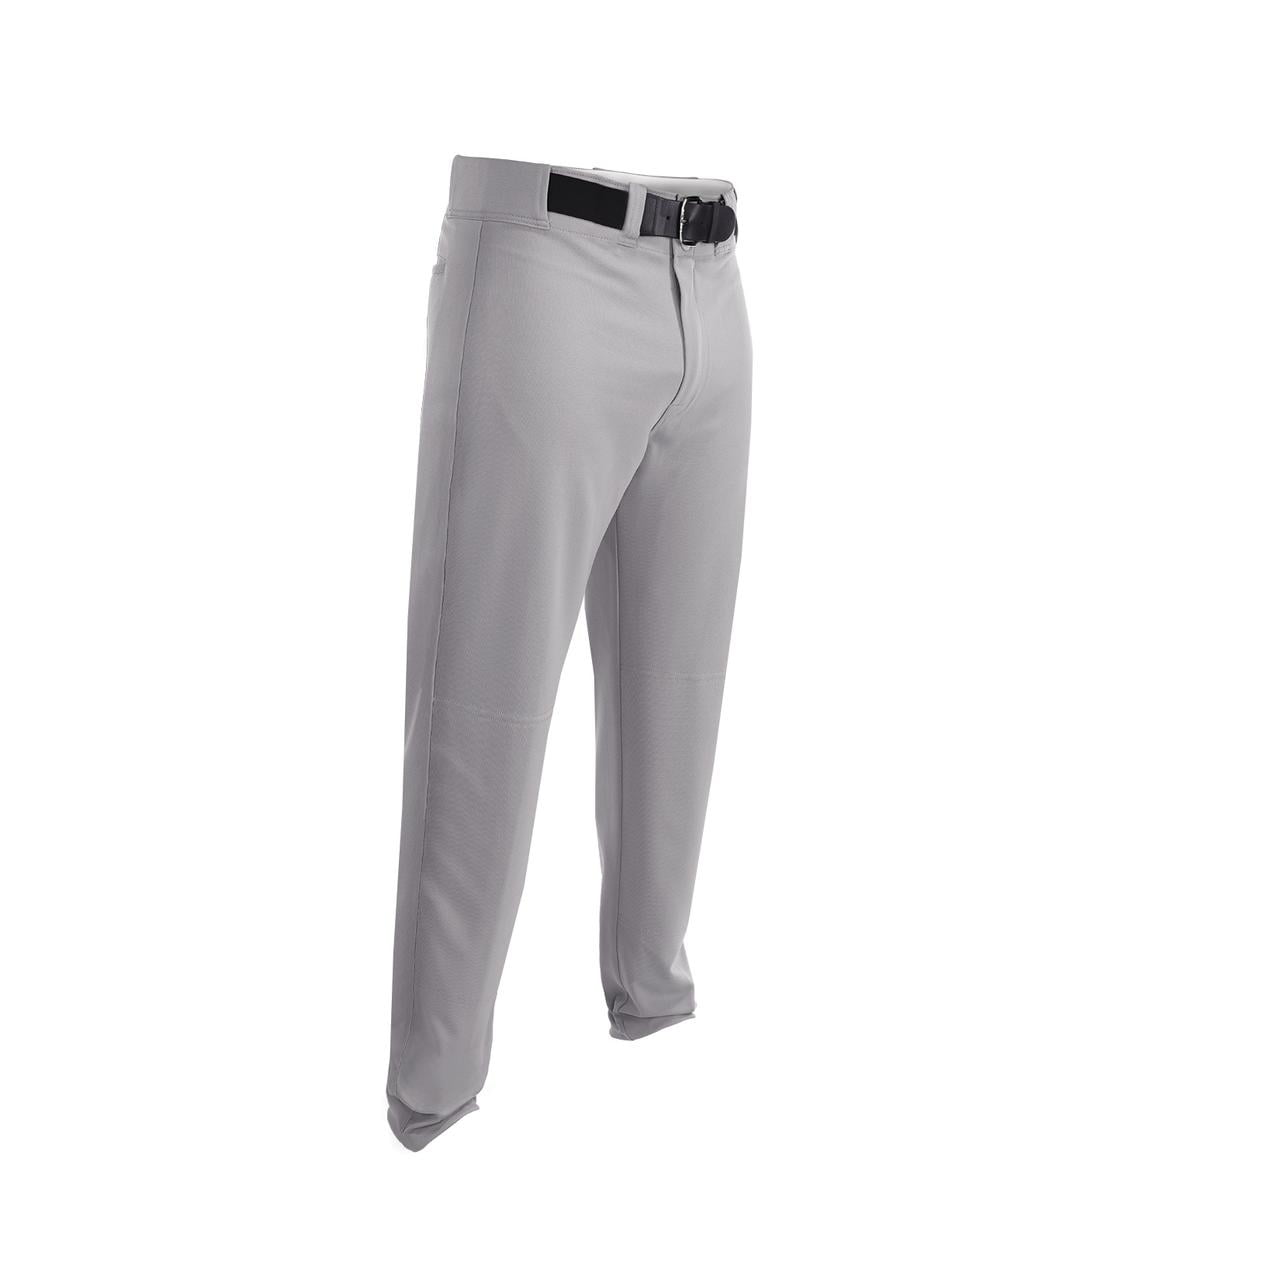 Base ball Baseball Pants Youth boys Grey Gray Large Polyester Pullup NEW 